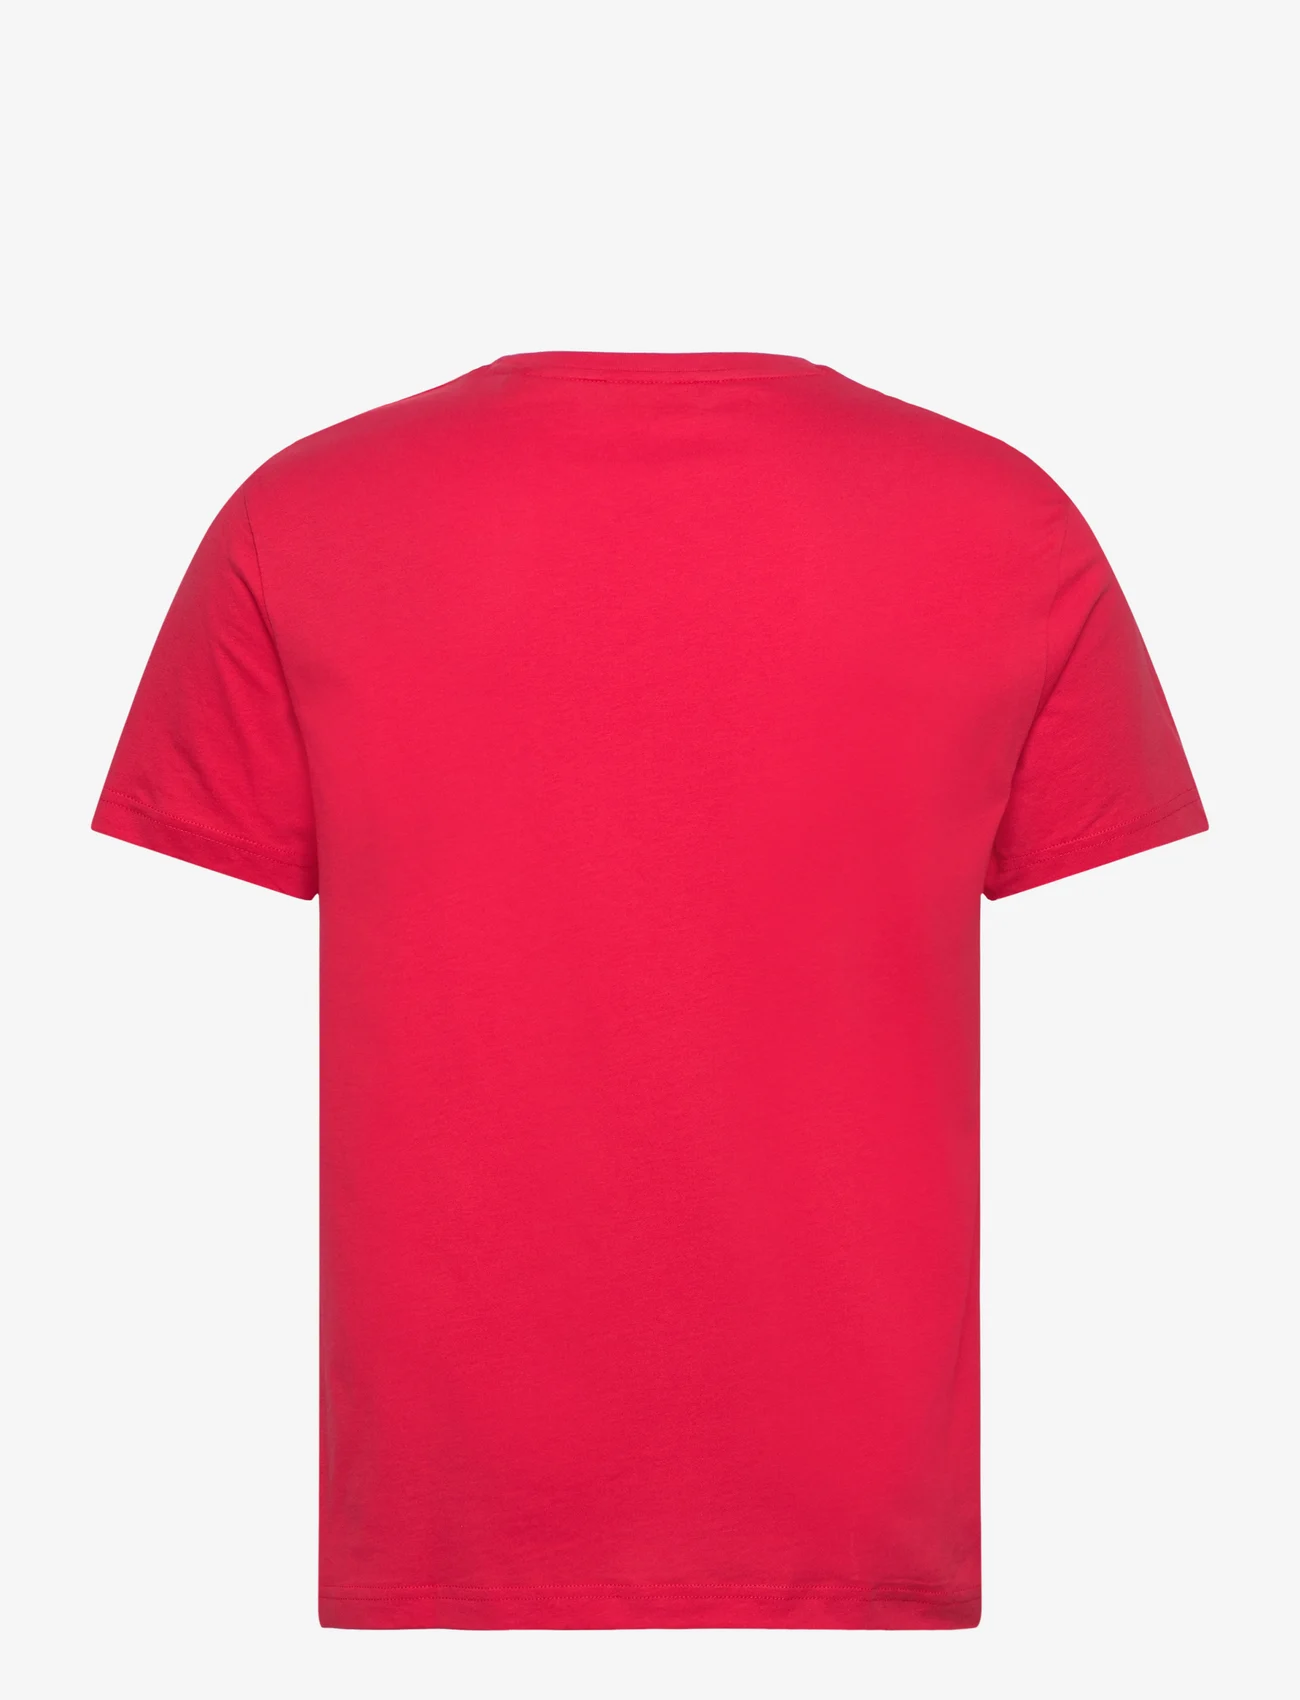 GANT - LOGO SS T-SHIRT - kortärmade t-shirts - bright red - 1